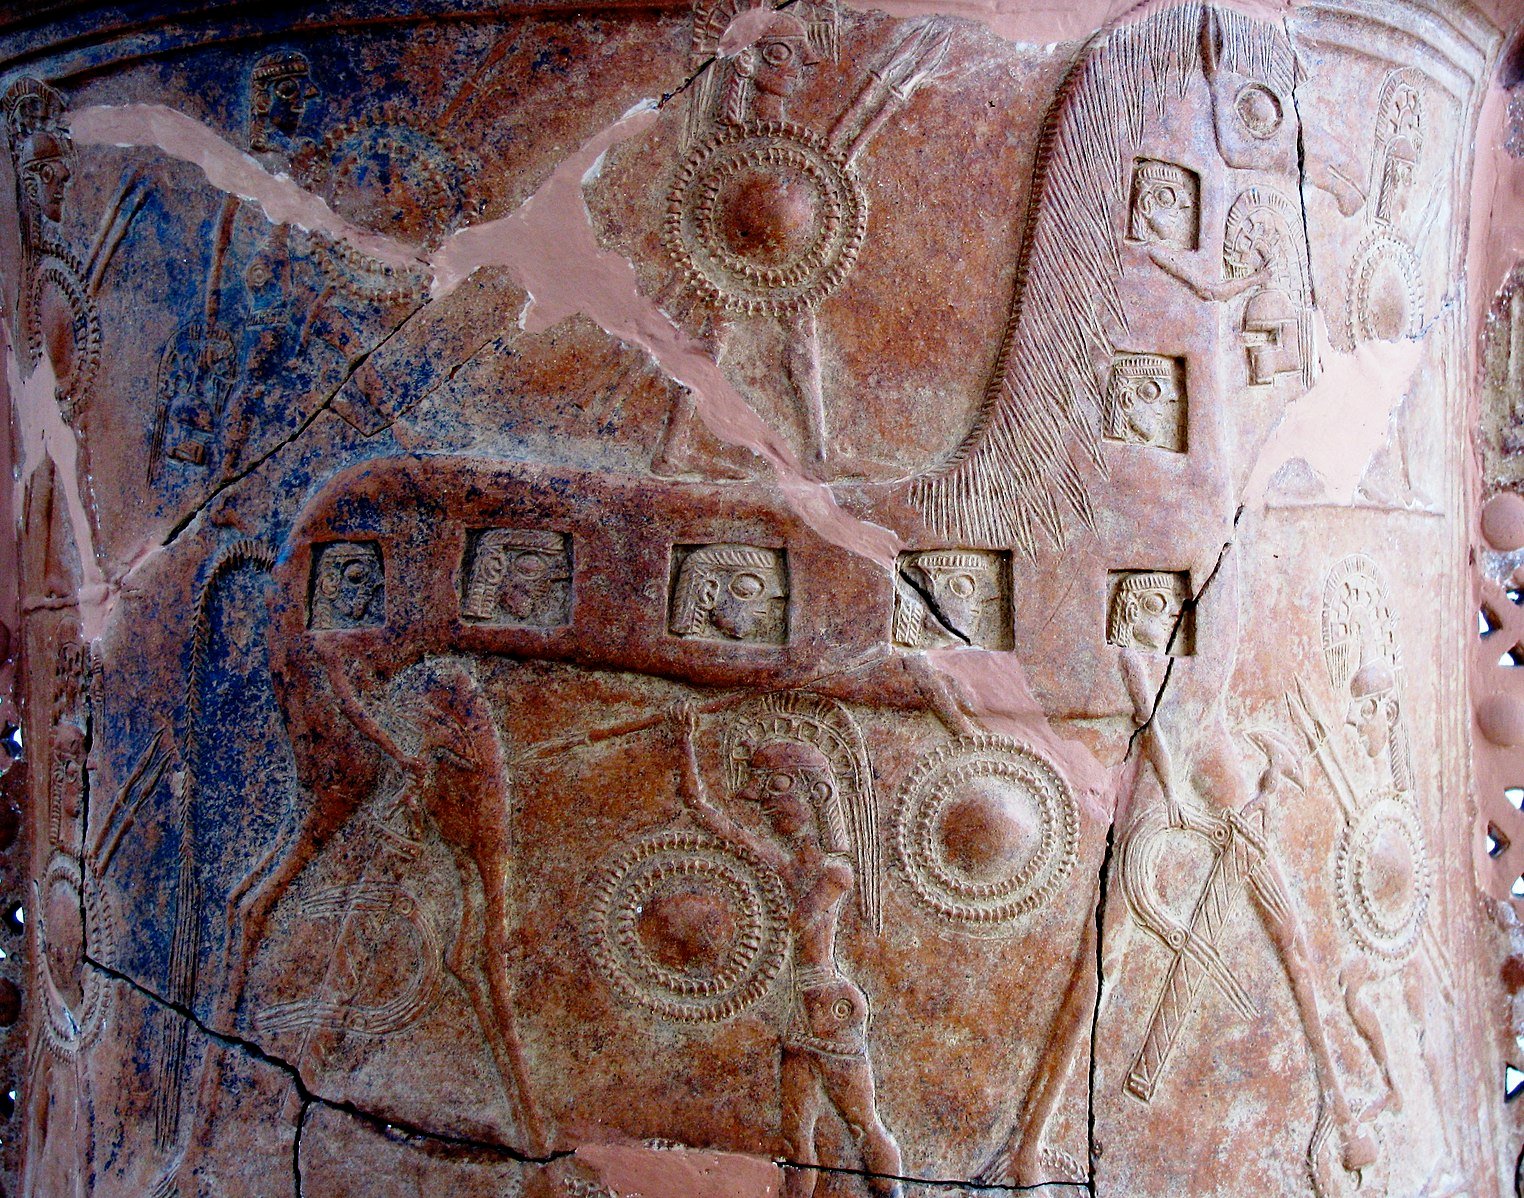 Mykonos Vase depicting the Trojan Horse